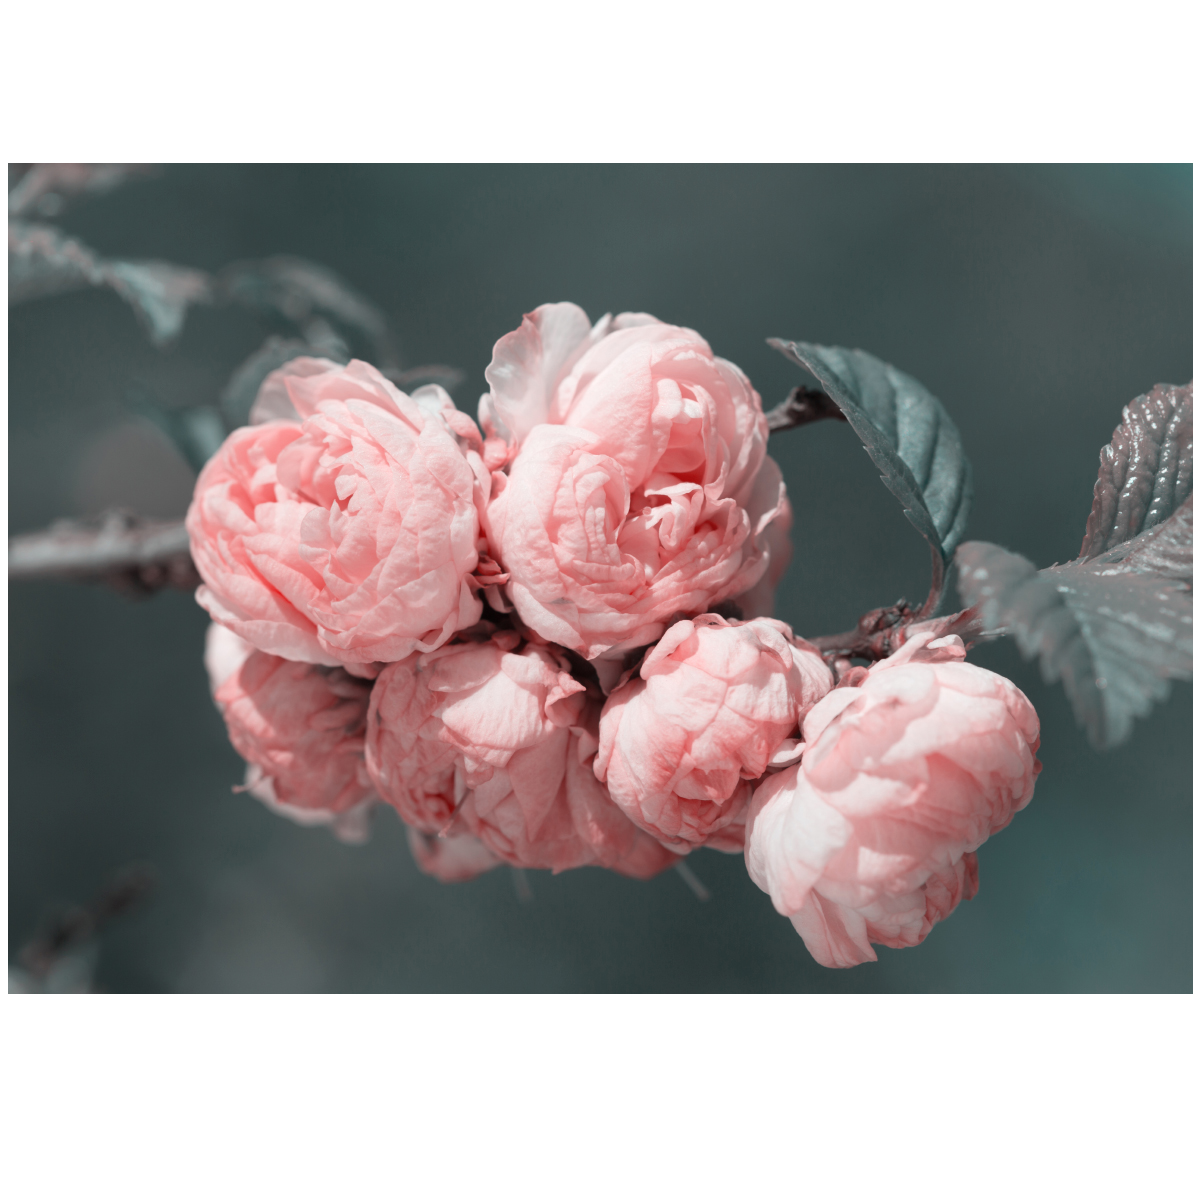 Картина на холсте 57x40 см "Бутоны розовых цветков на ветке", HE-111-005